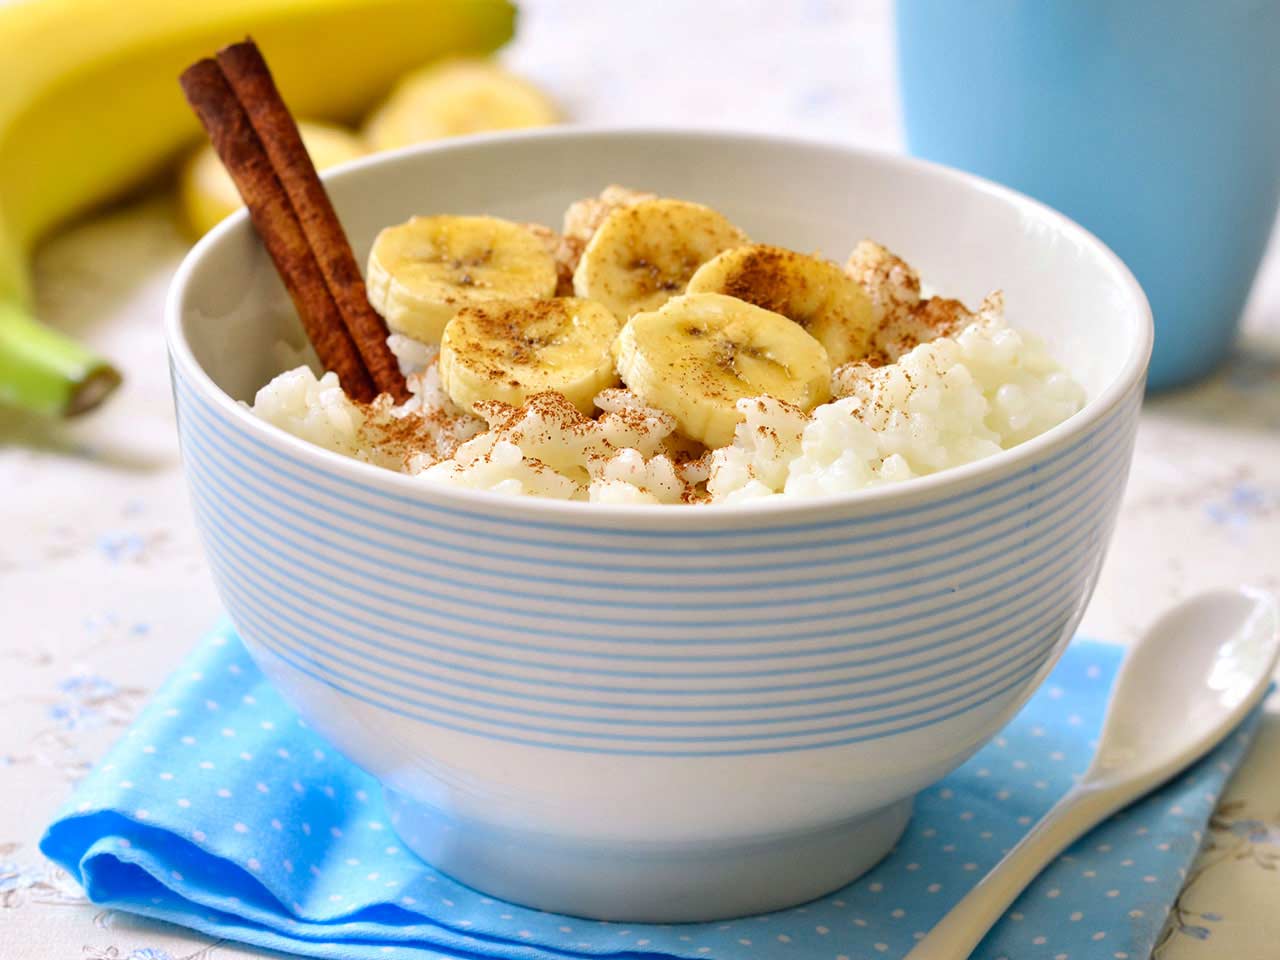 Bowl of porridge with banana and cinammon sticks